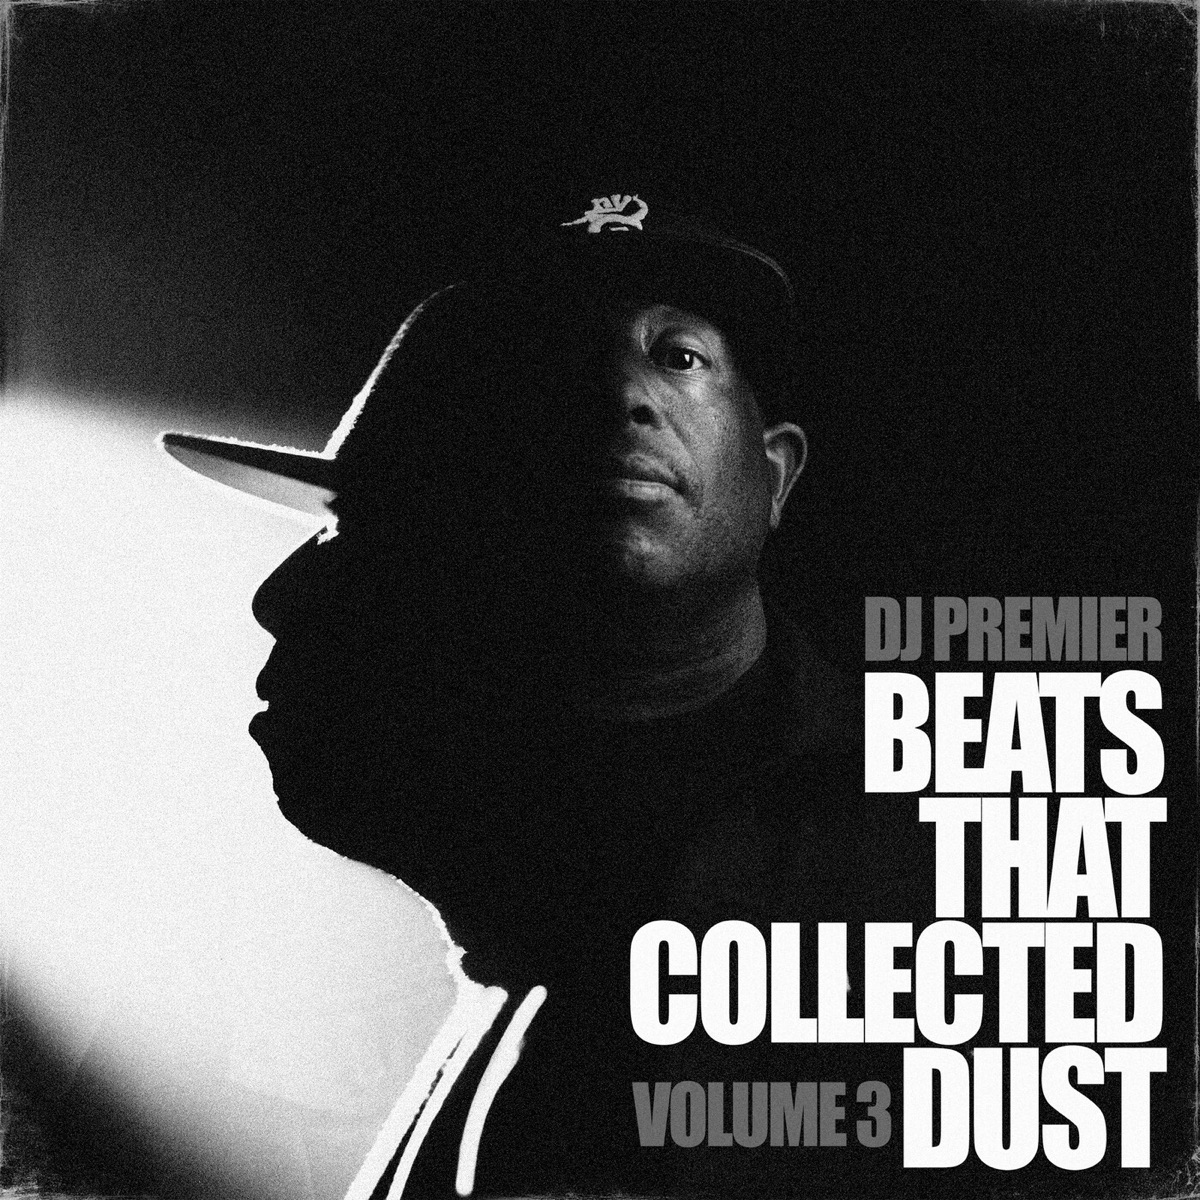 MP3: DJ Premier – Eiht 45 (Instrumental)